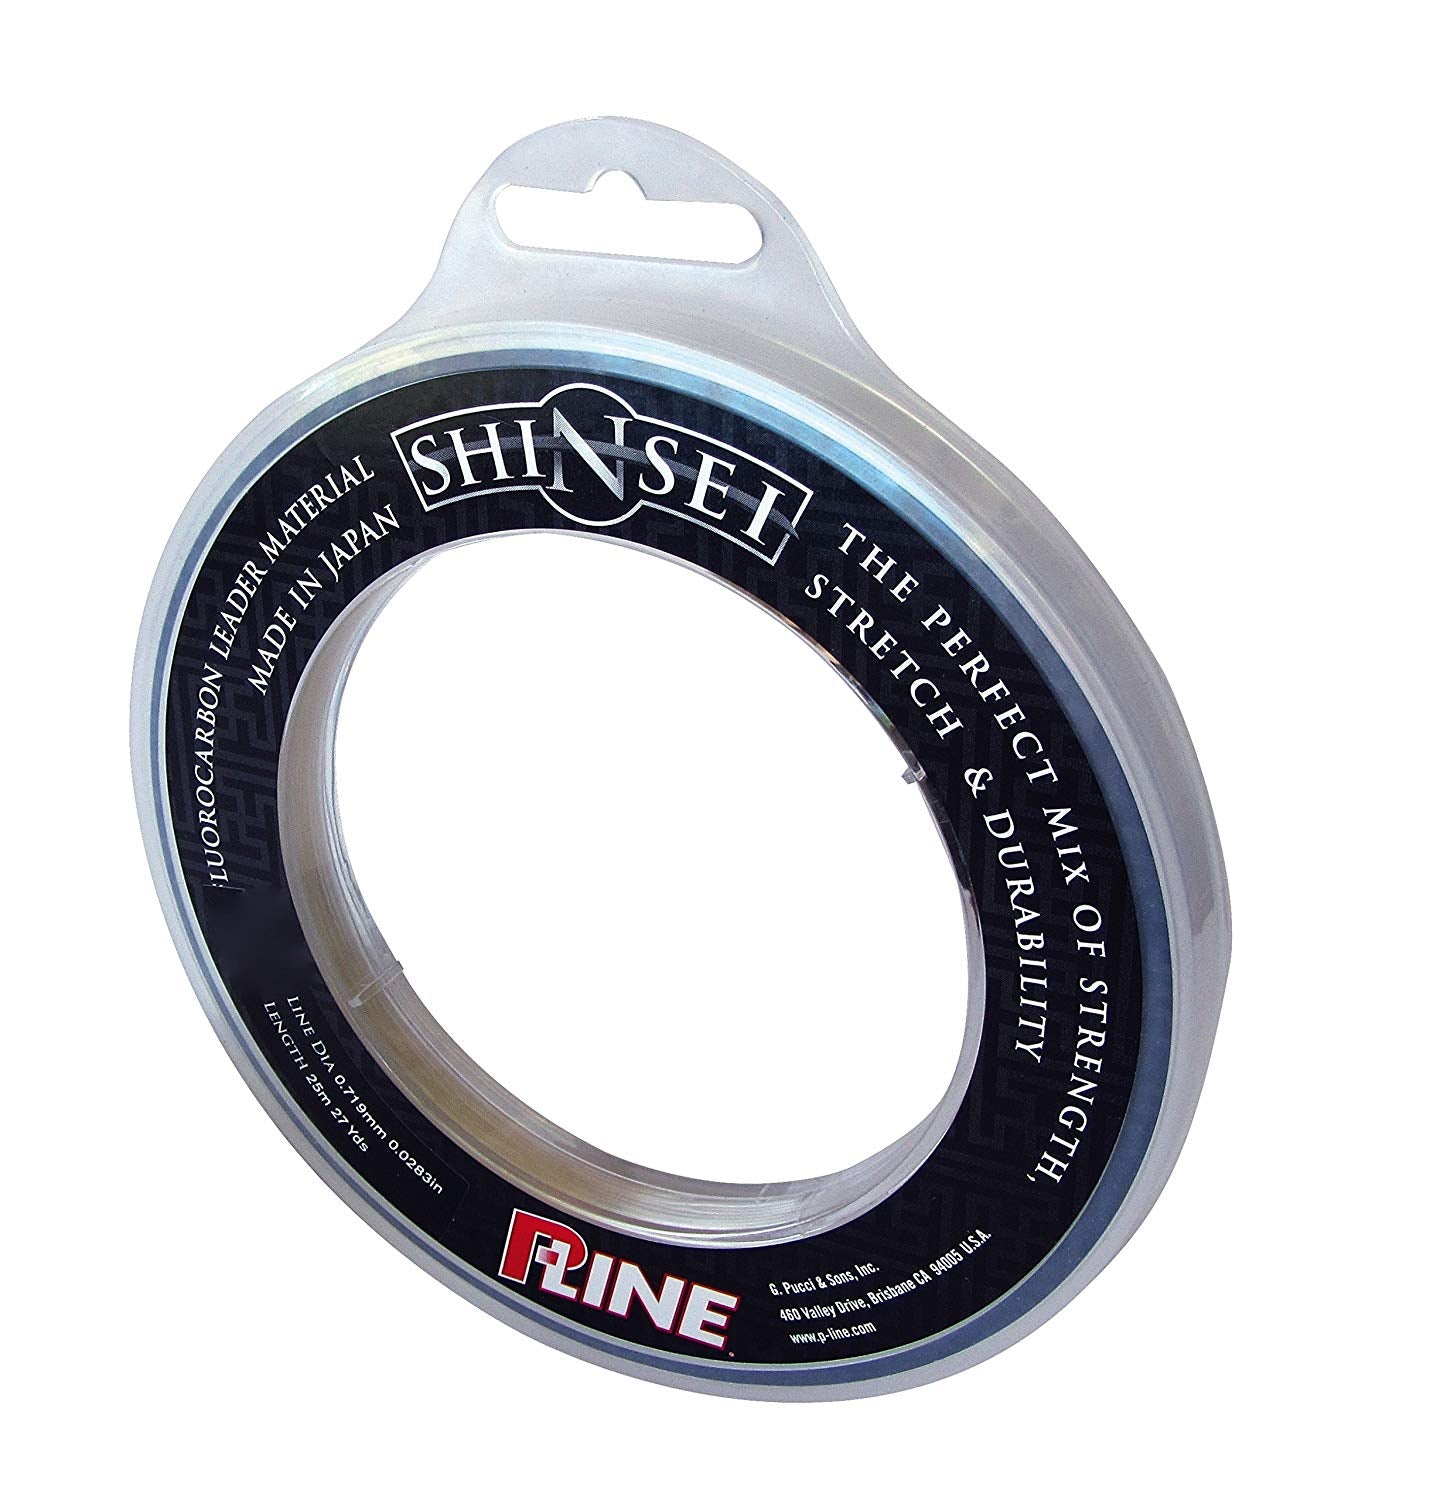 P-Line Shinsei 100% Fluorocarbon Leader Material